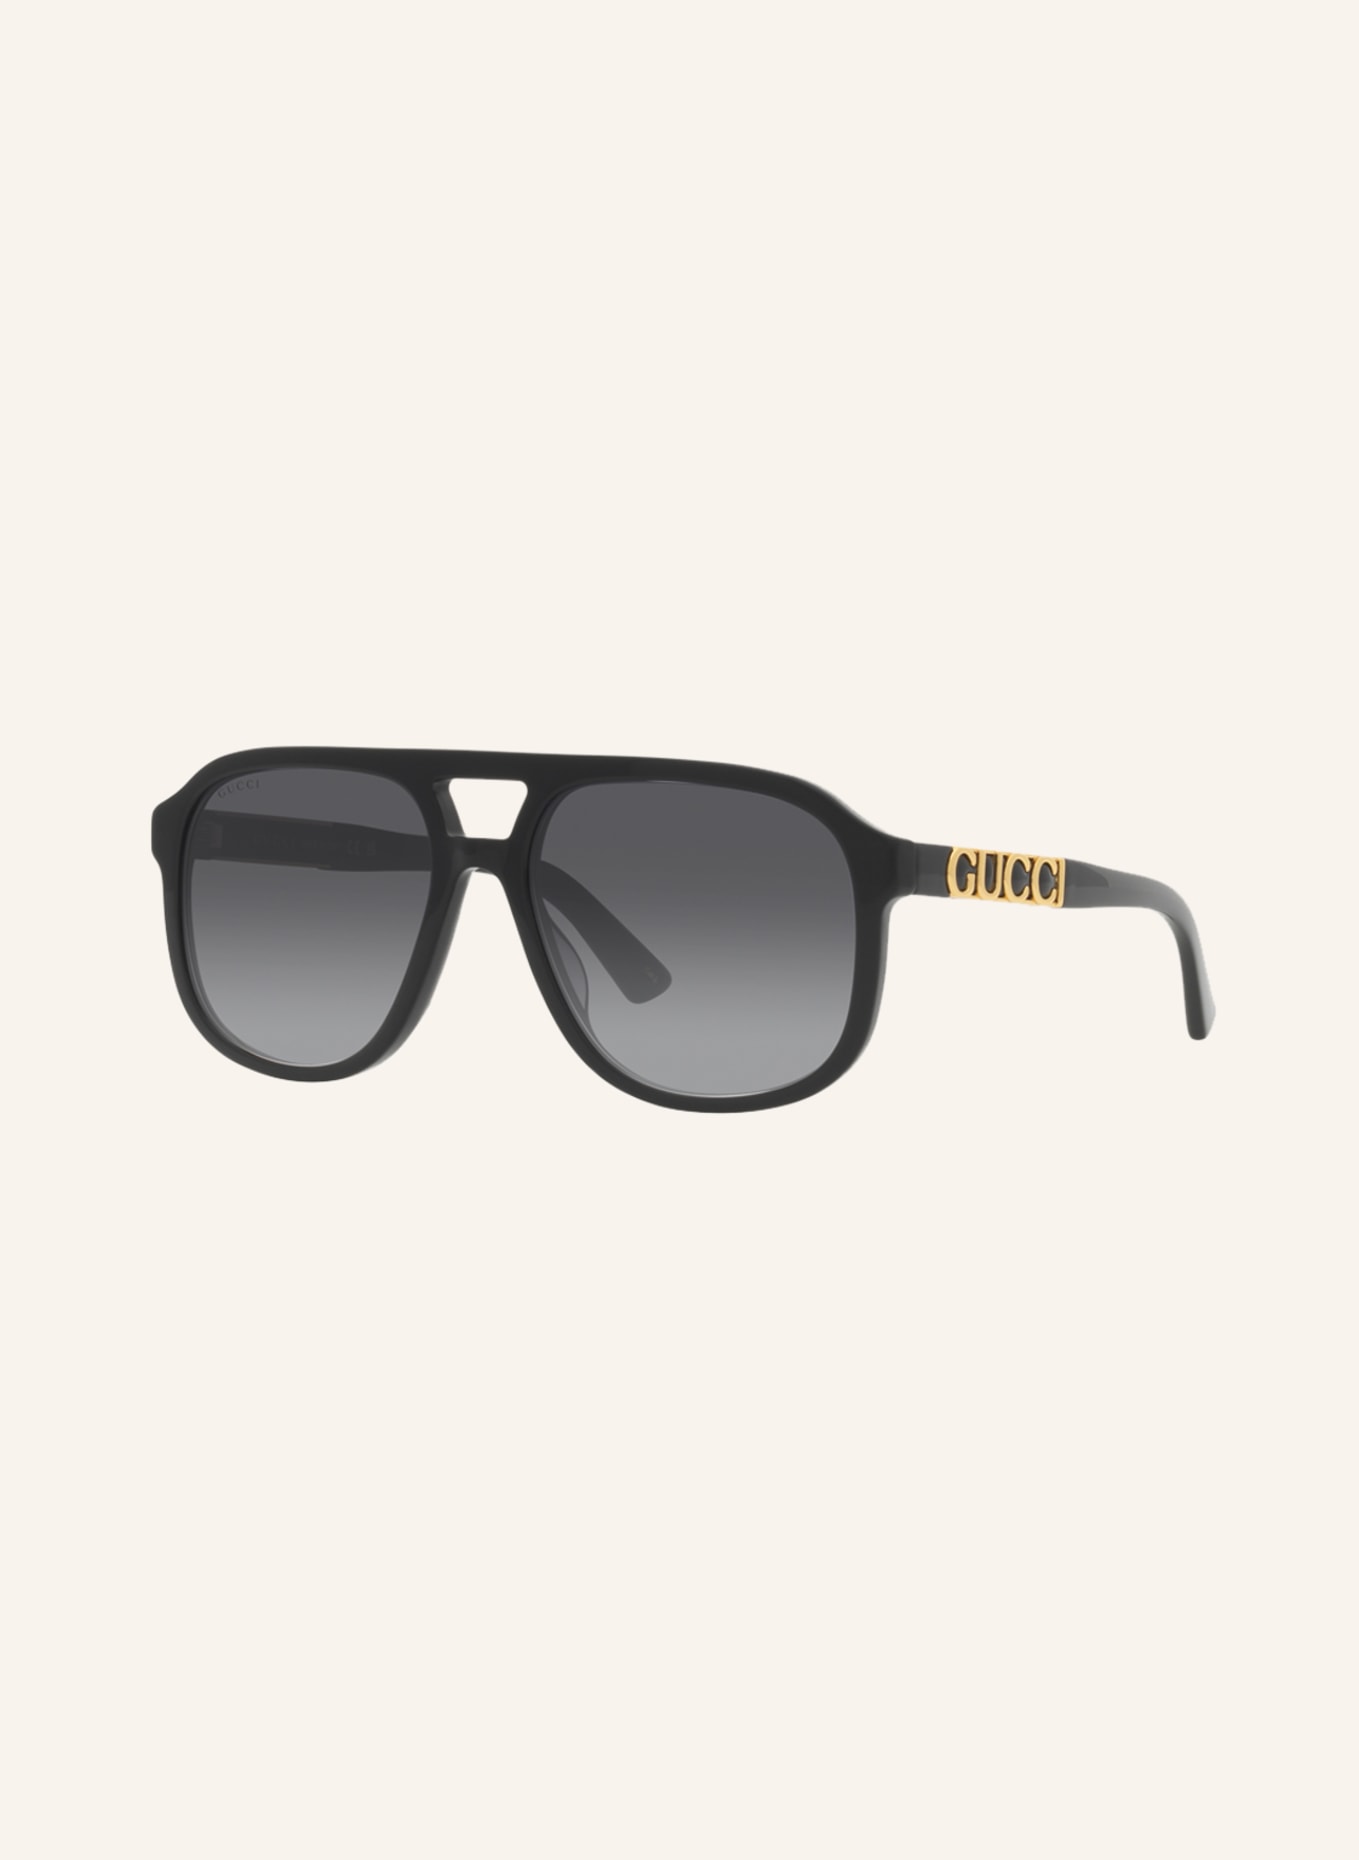 Gucci Rectangle Sunglasses Black Flash Sales, SAVE 45% - abaroadrive.com